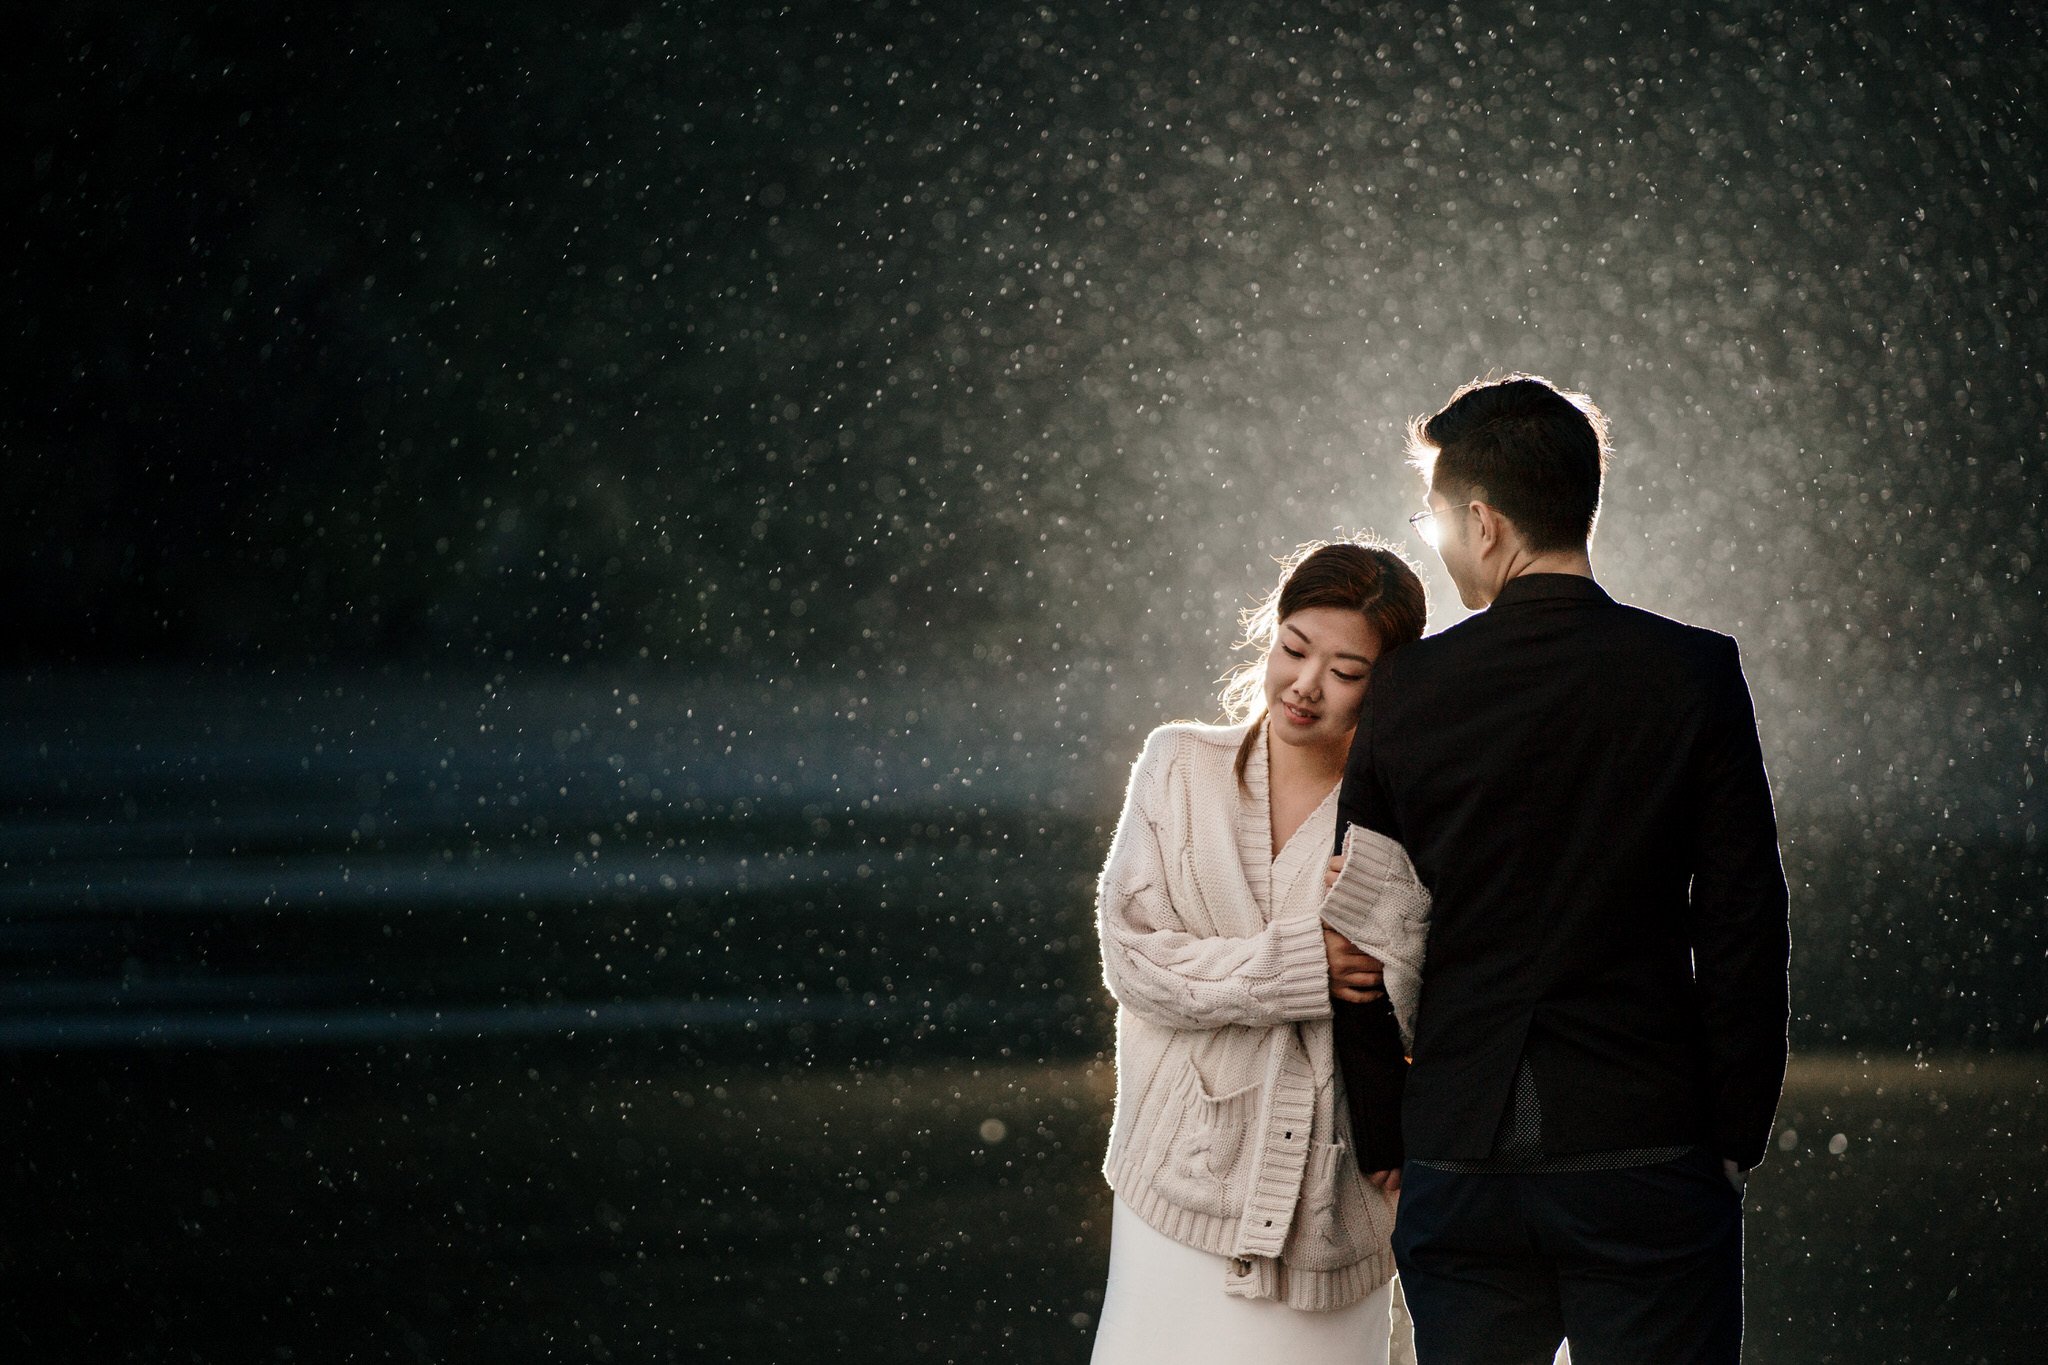 auckland-wedding-photographer-videographer-story-by-koo-koo's-jewelry-dear-white-productions-pre-wedding-engagement-photo-kare-karekare-falls-waterfall-beach-west-piha-muriwai-rain-night (63).JPG